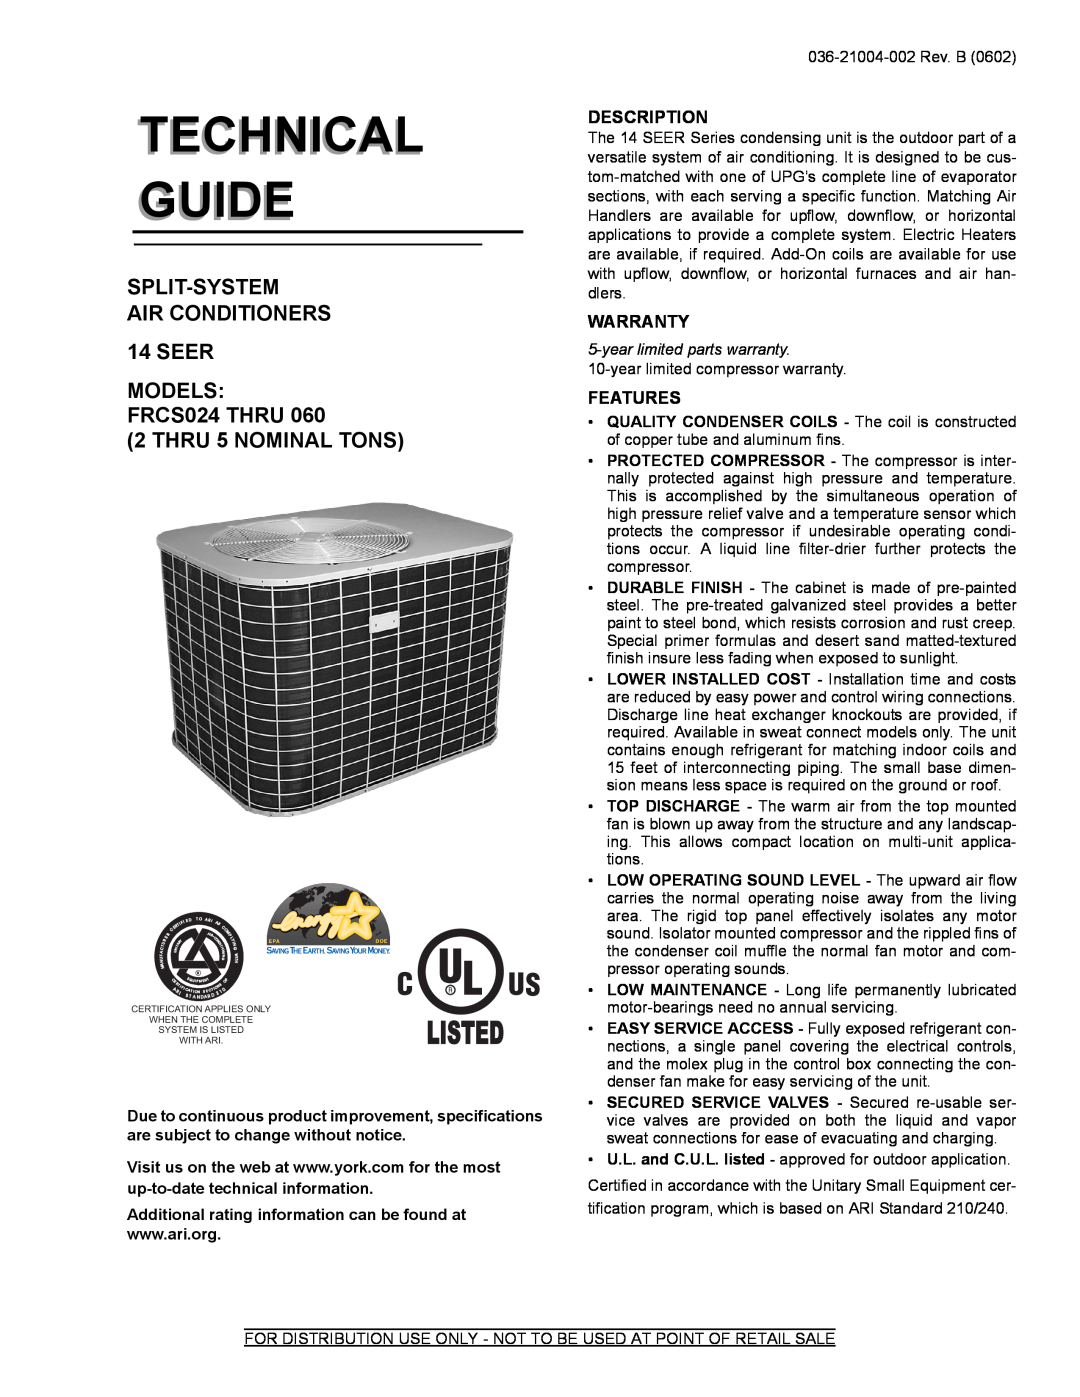 York FRCS024 warranty Description, Warranty, Features, Technical Guide, SPLIT-SYSTEM AIR CONDITIONERS 14 SEER 